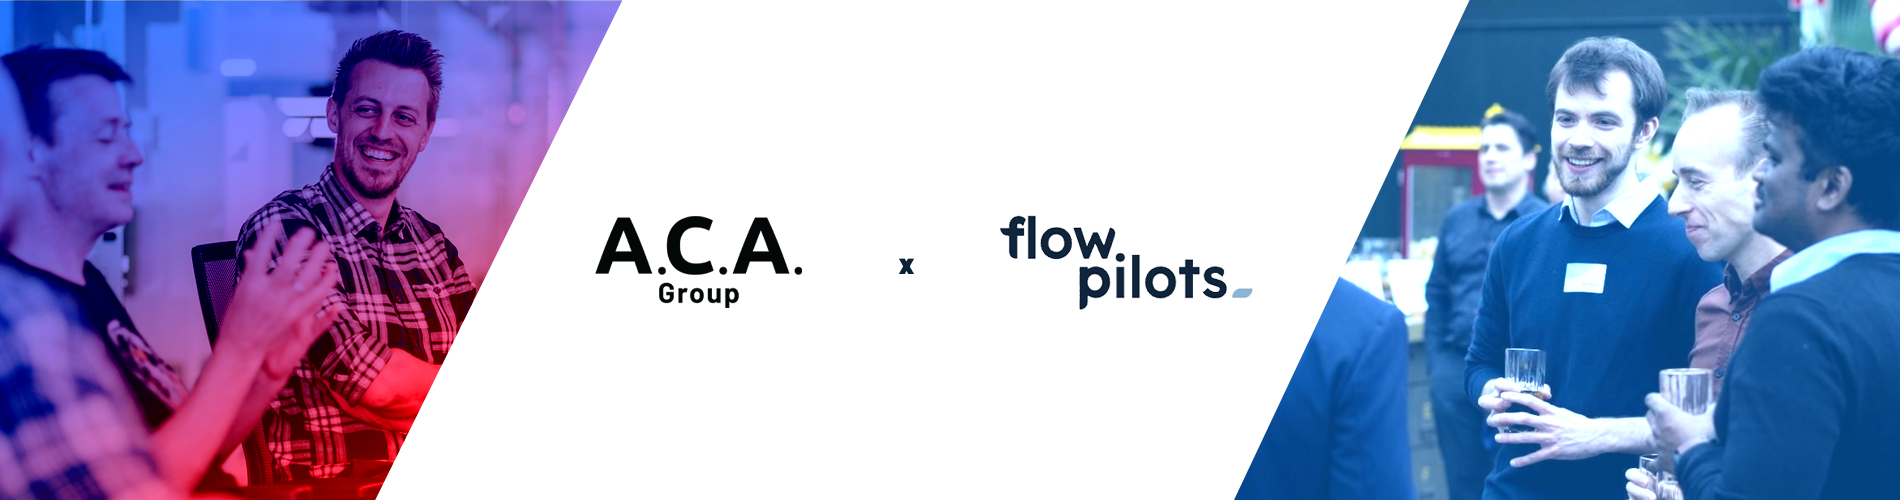 ACA Group x Flow Pilots